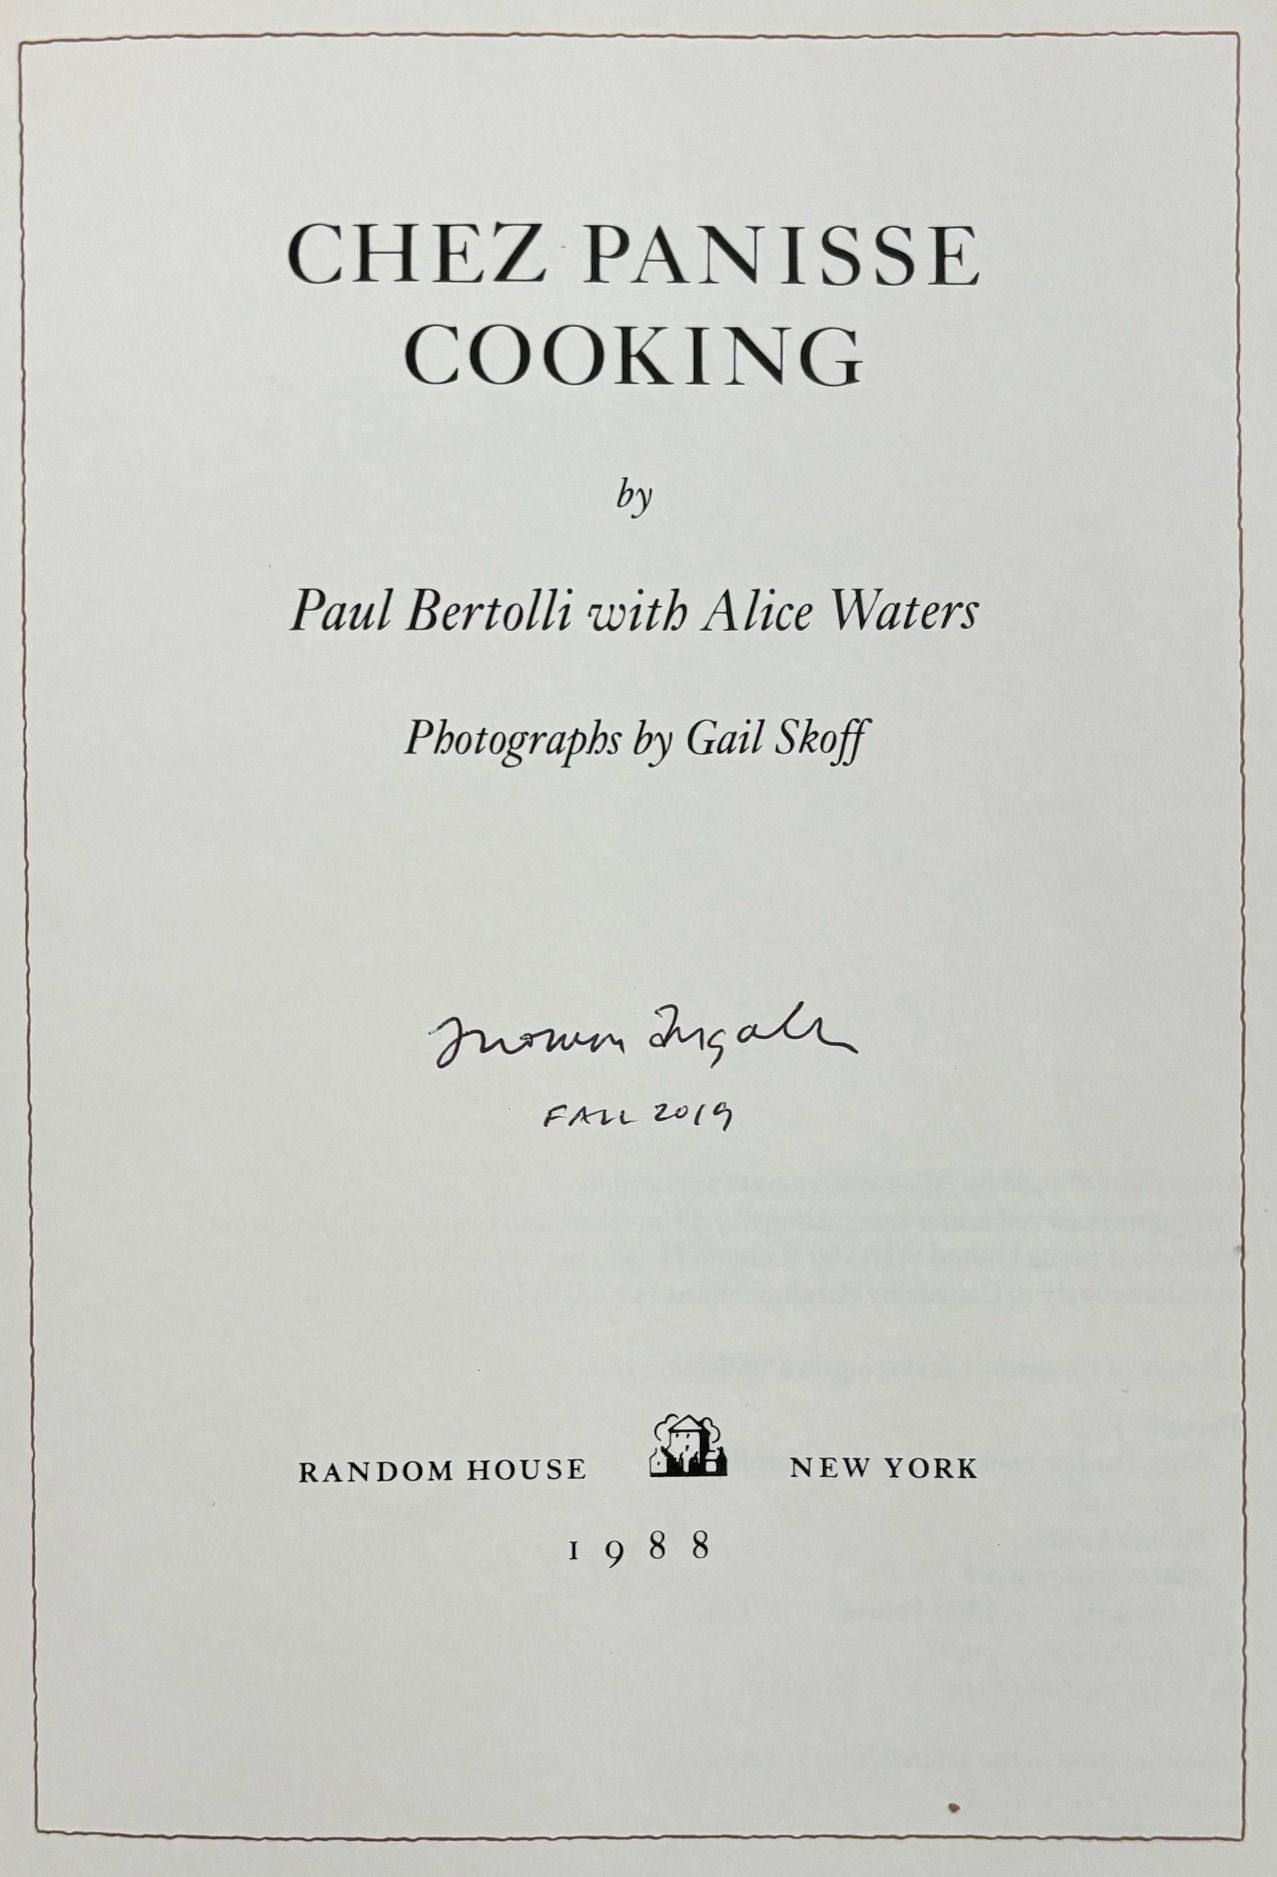 (*NEW ARRIVAL*) (Chez Panisse) Bertolli, Paul & Alice Waters. Chez Panisse Cooking. SIGNED!